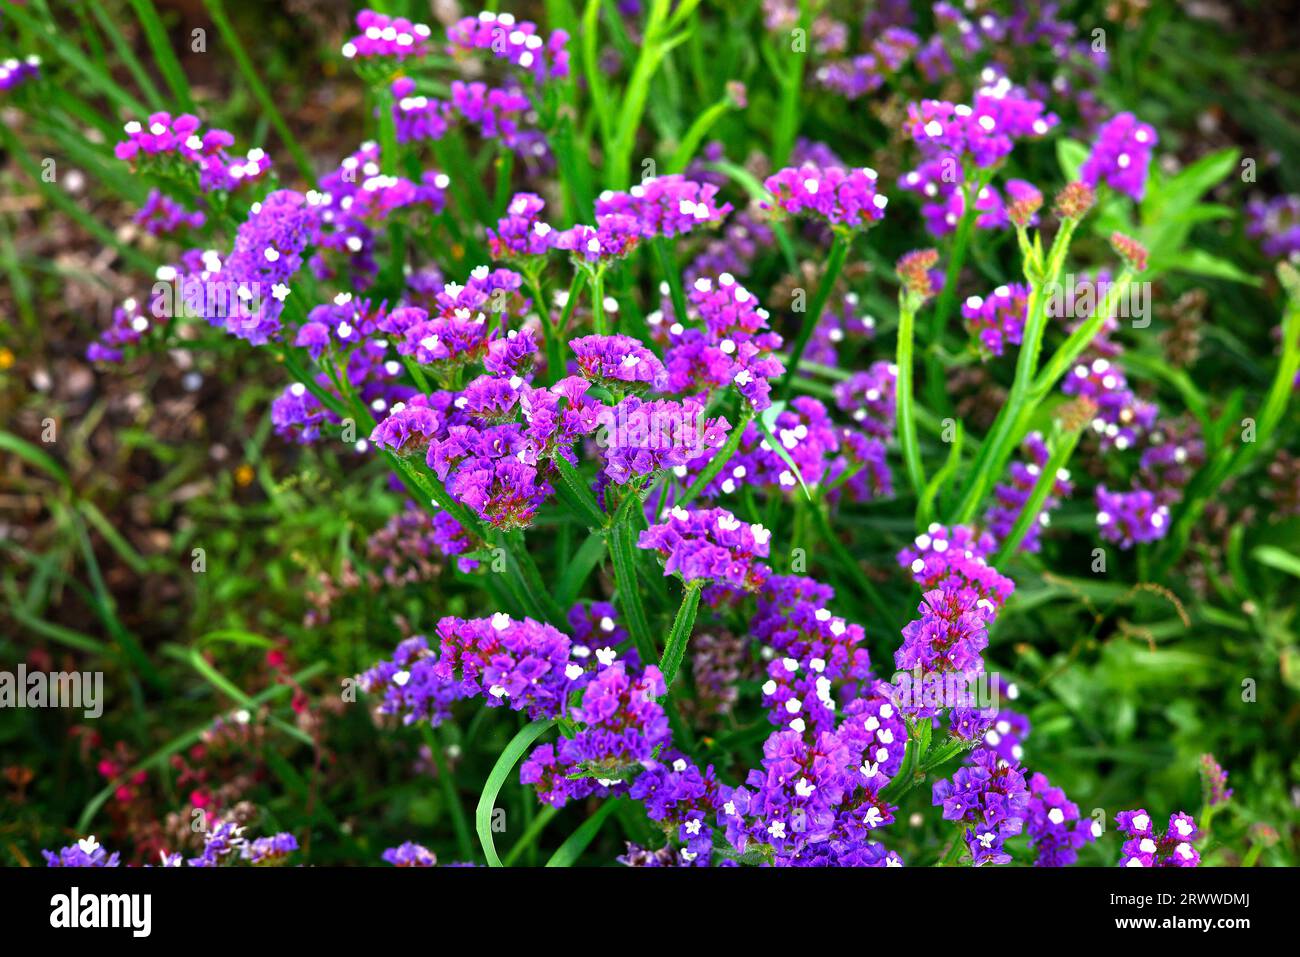 Closeup of the violet-purple flowers of the annual summer long flowering garden plant limonium sinuatum purple attraction. Stock Photo